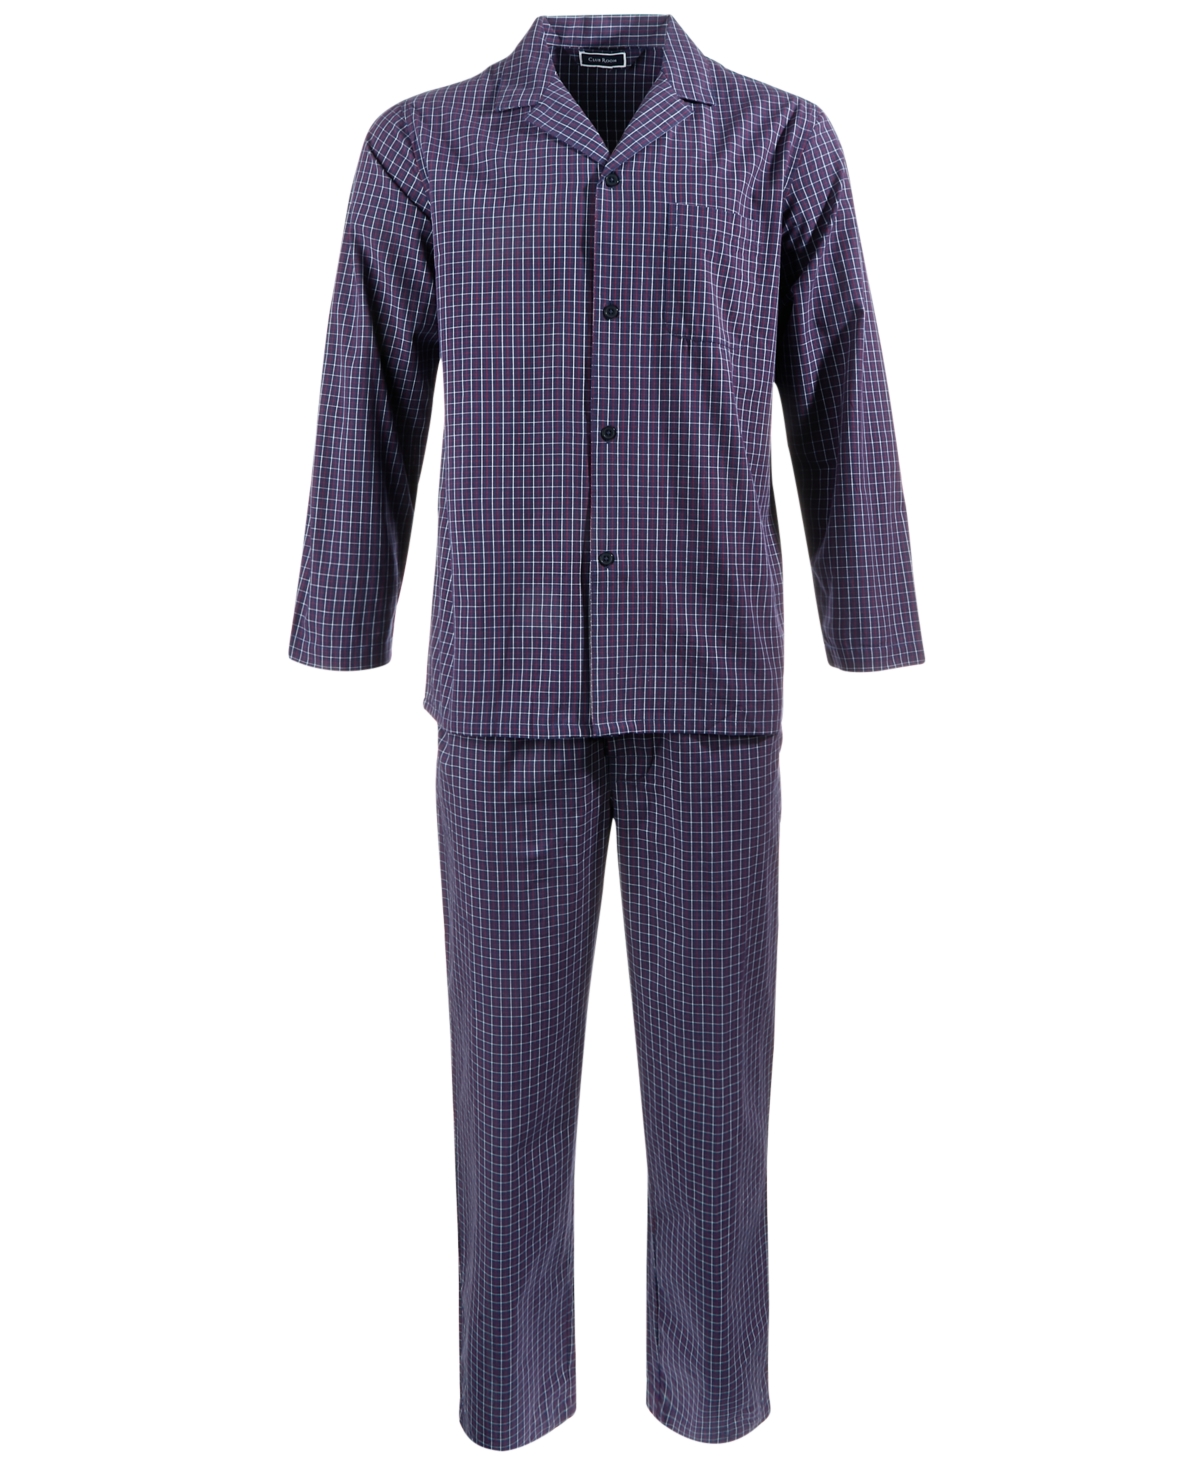 Men's Double Window Pane Pajama Set, Created for Macy's - Navy Red